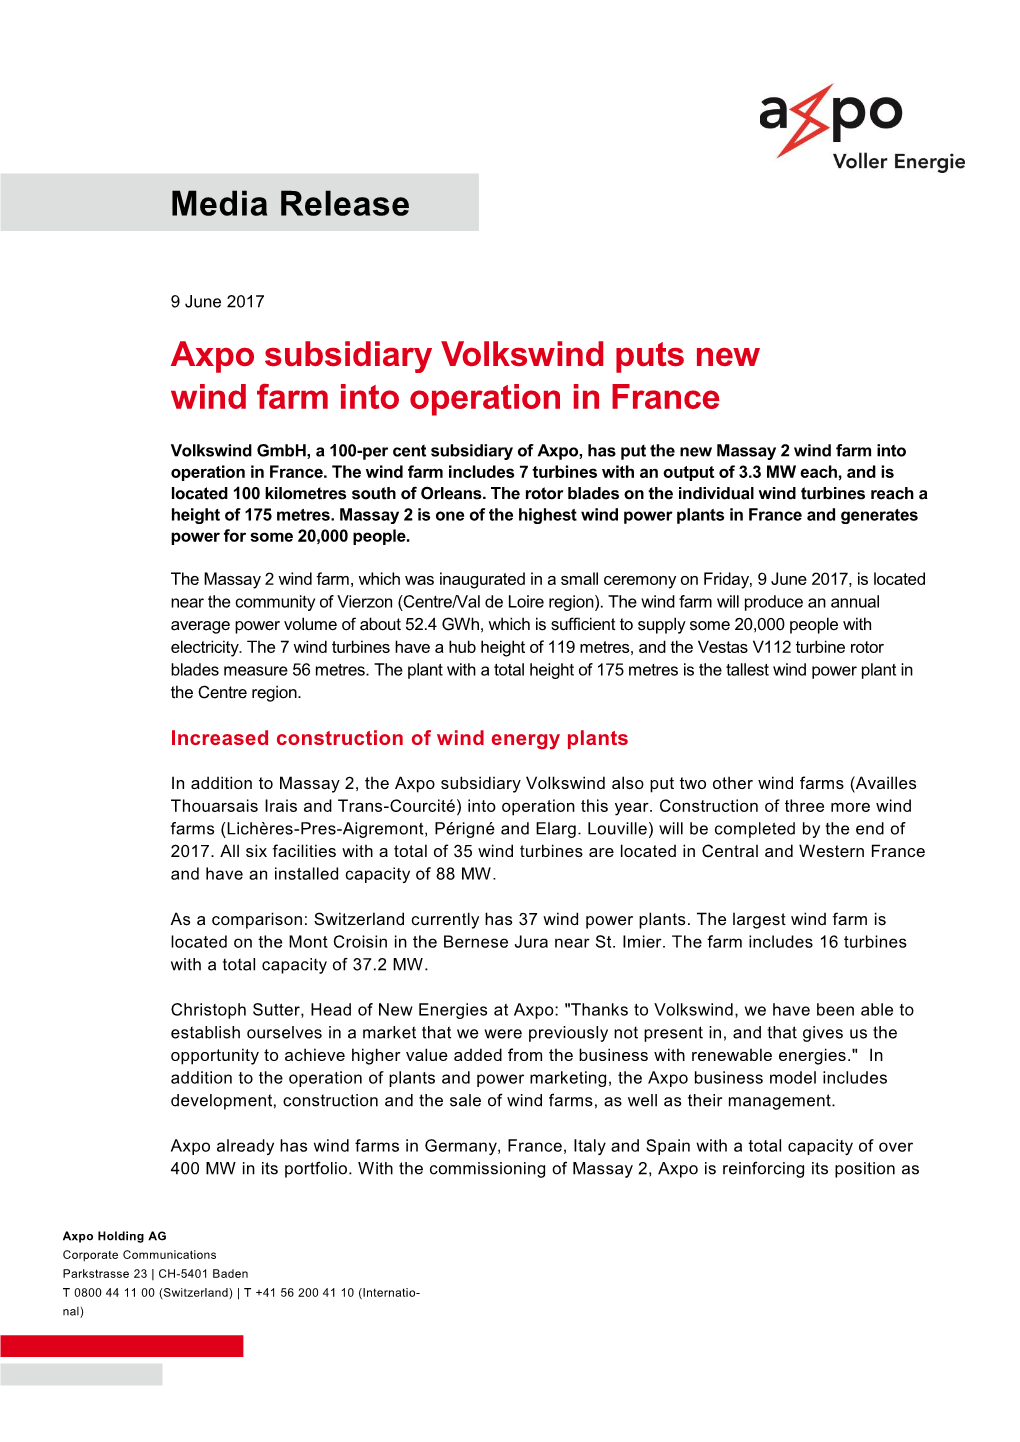 Media Release Axpo Subsidiary Volkswind Puts New Wind Farm Into